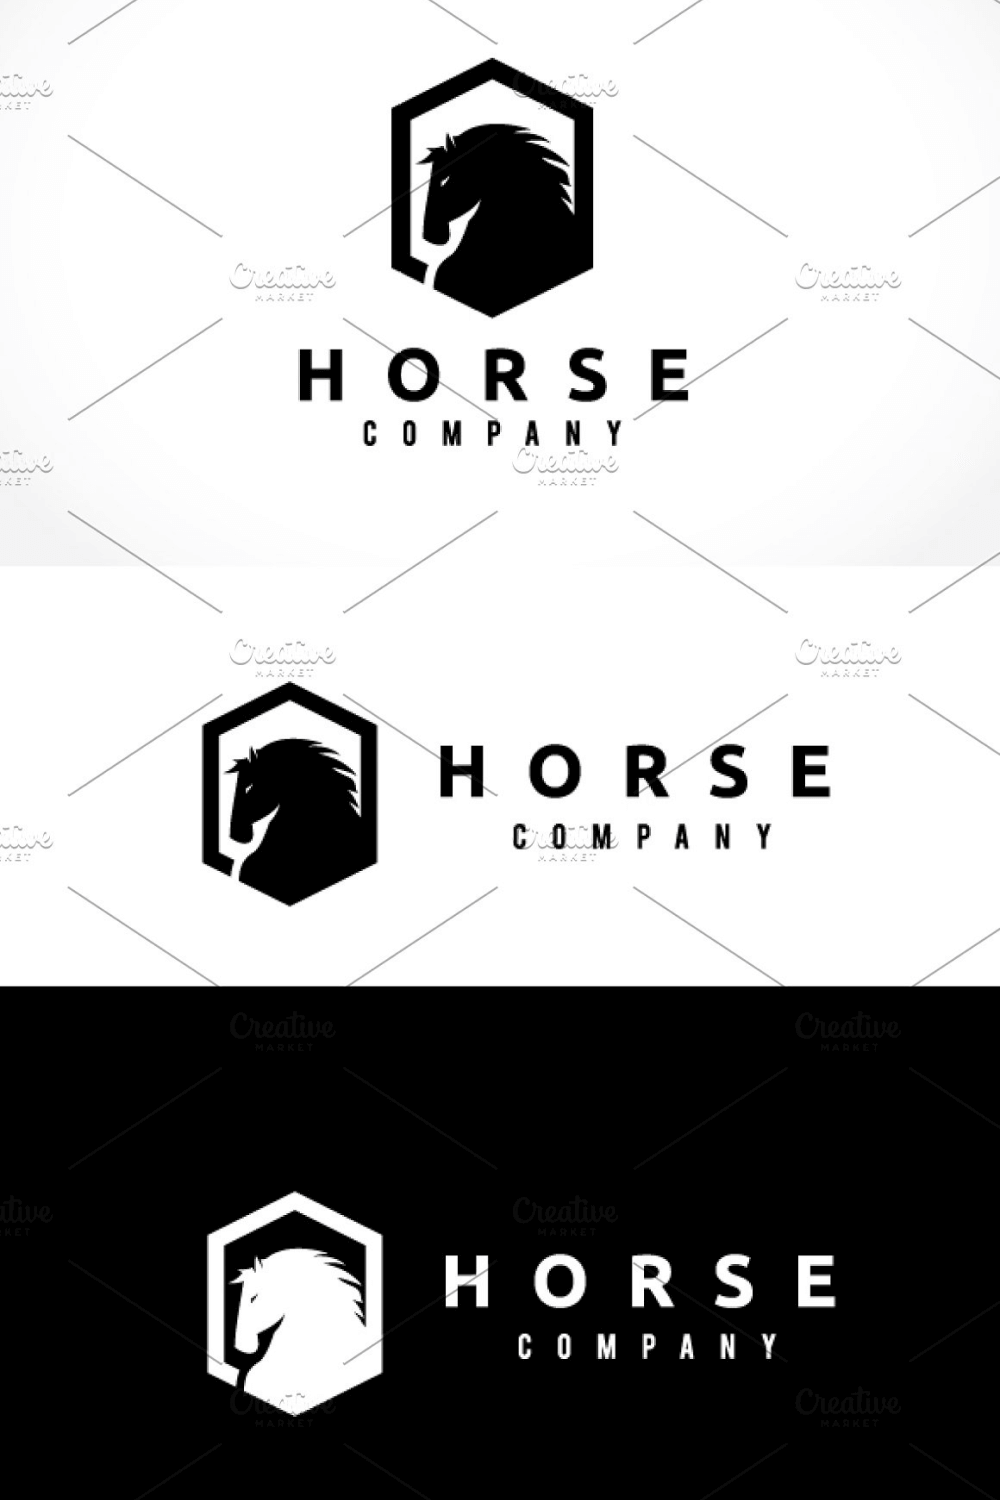 Horse concept design.